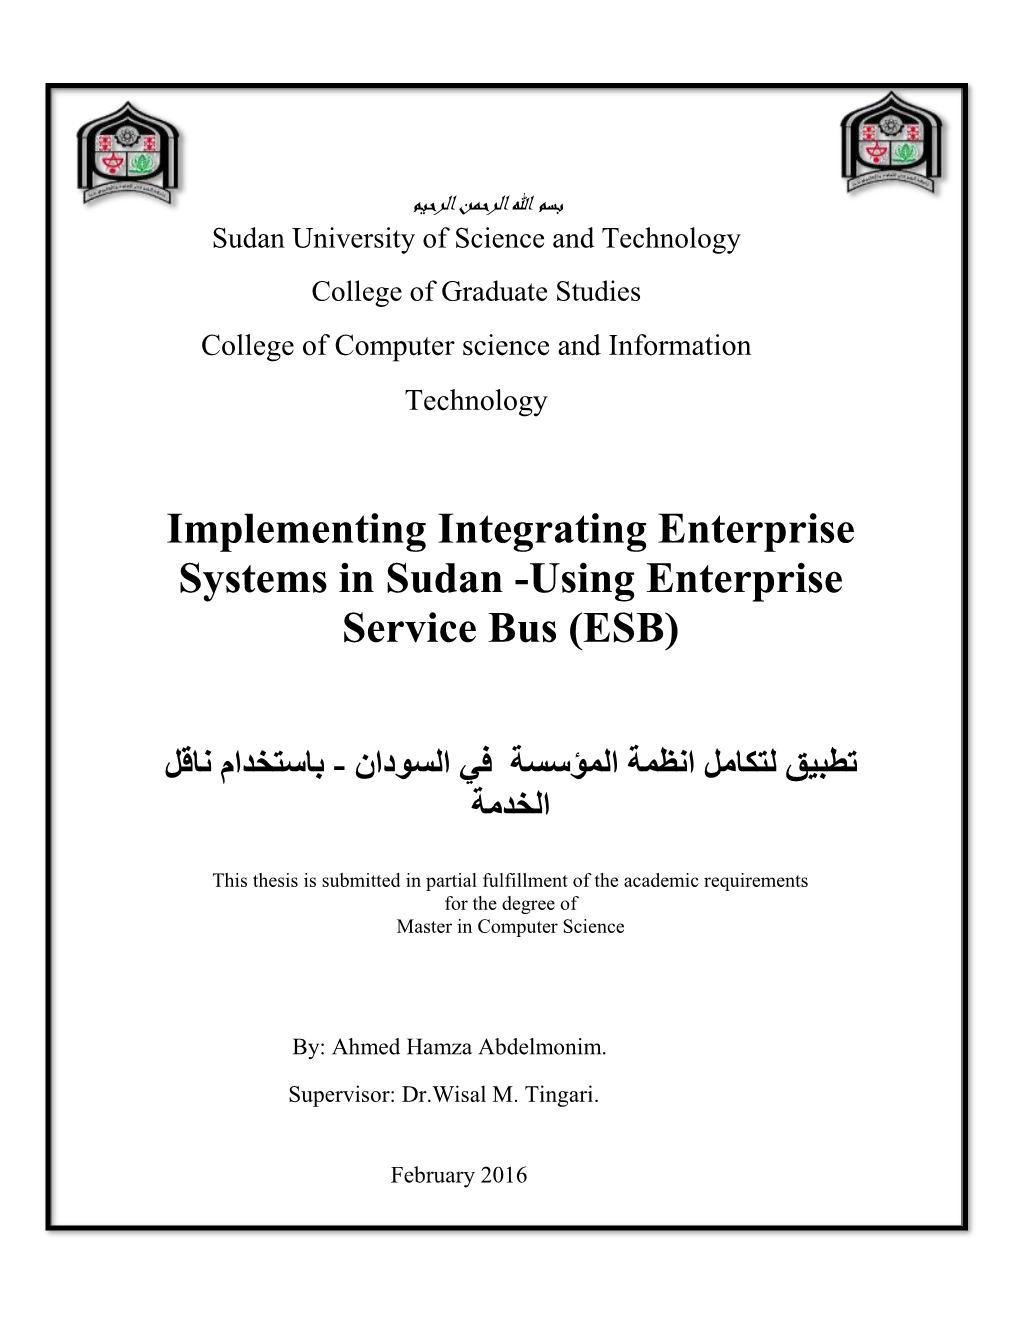 Using Enterprise Service Bus (ESB)